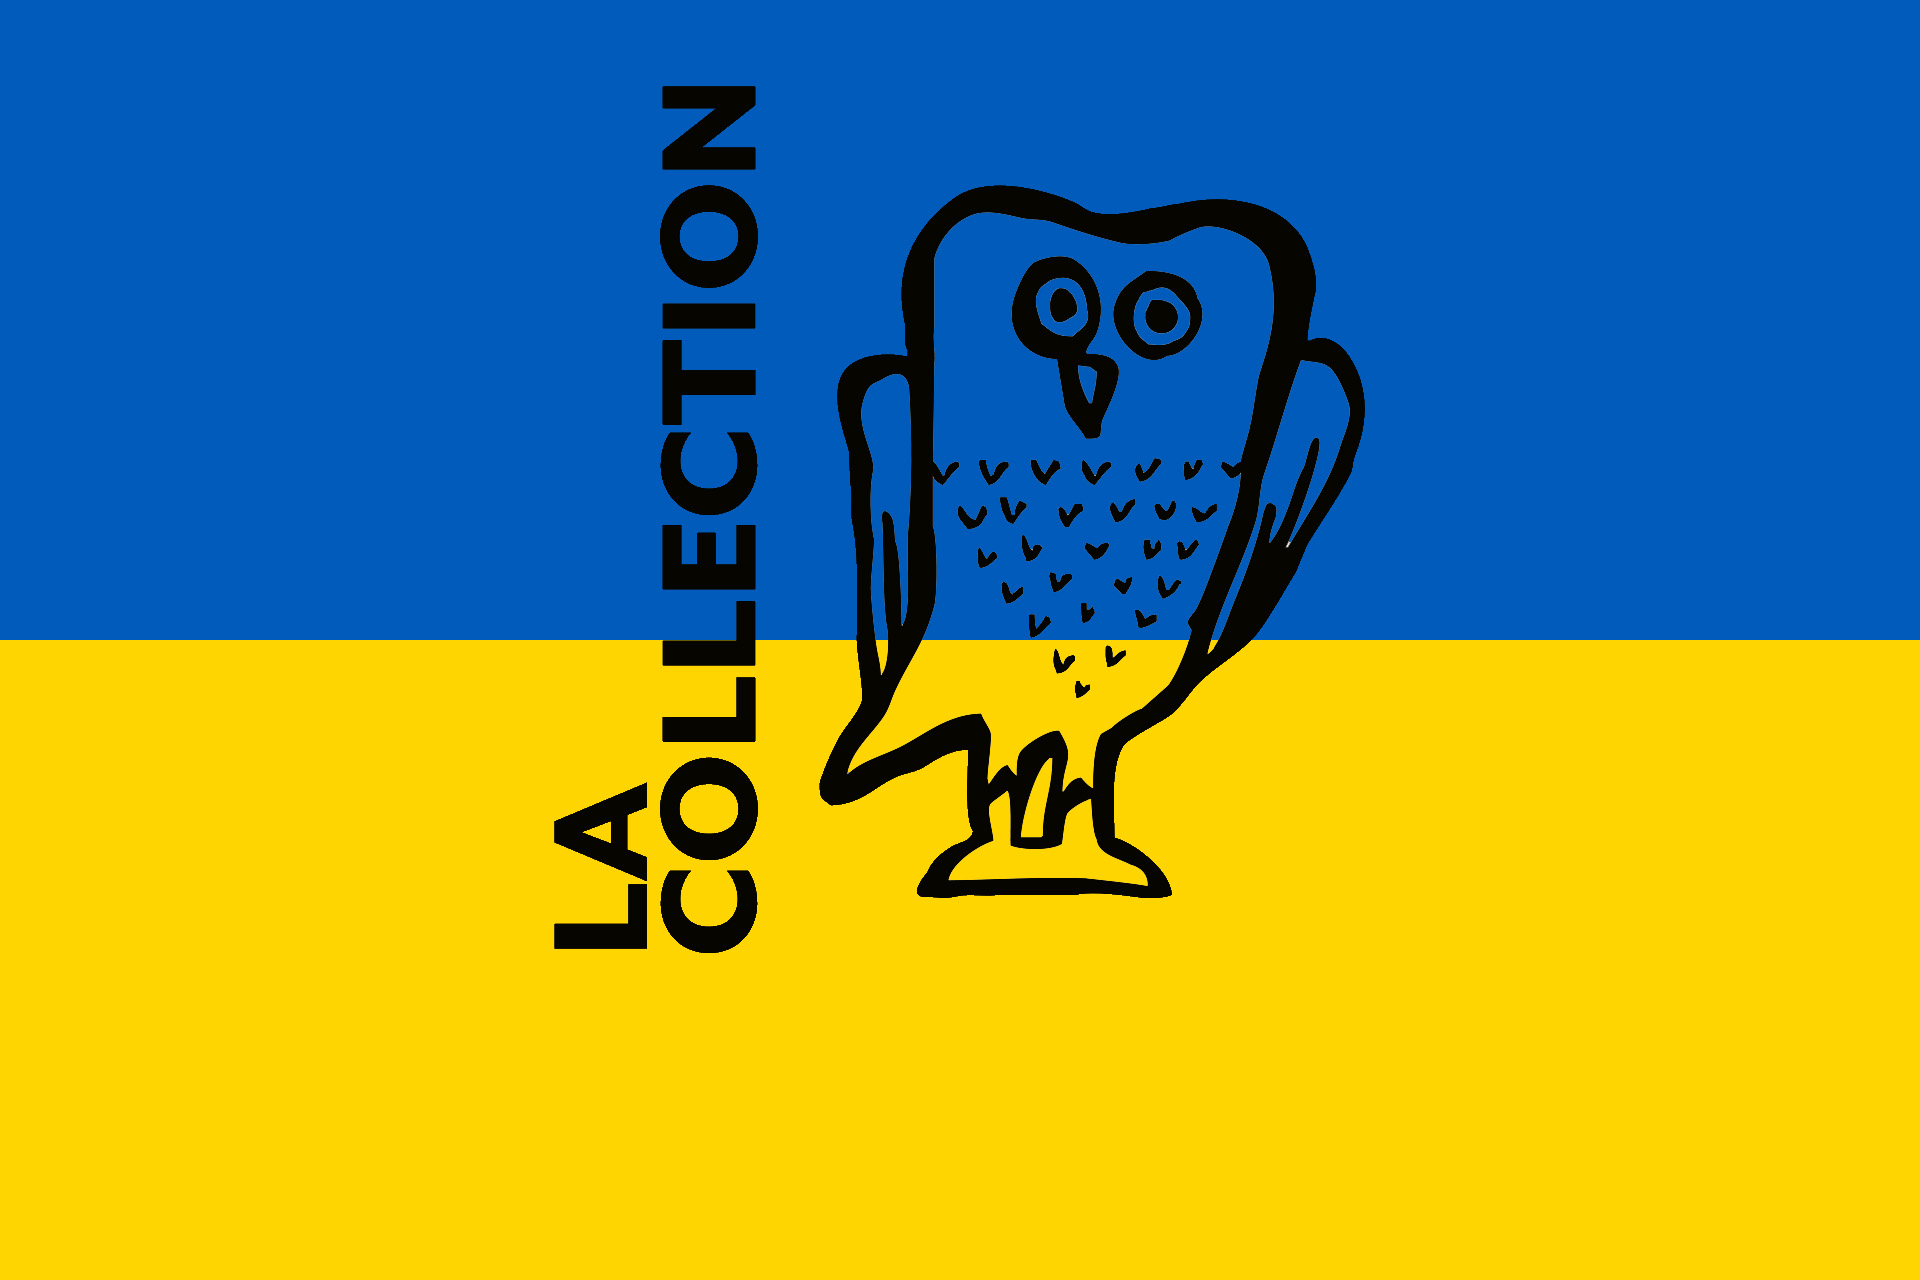 Flag of Ukraine.svg (1)h